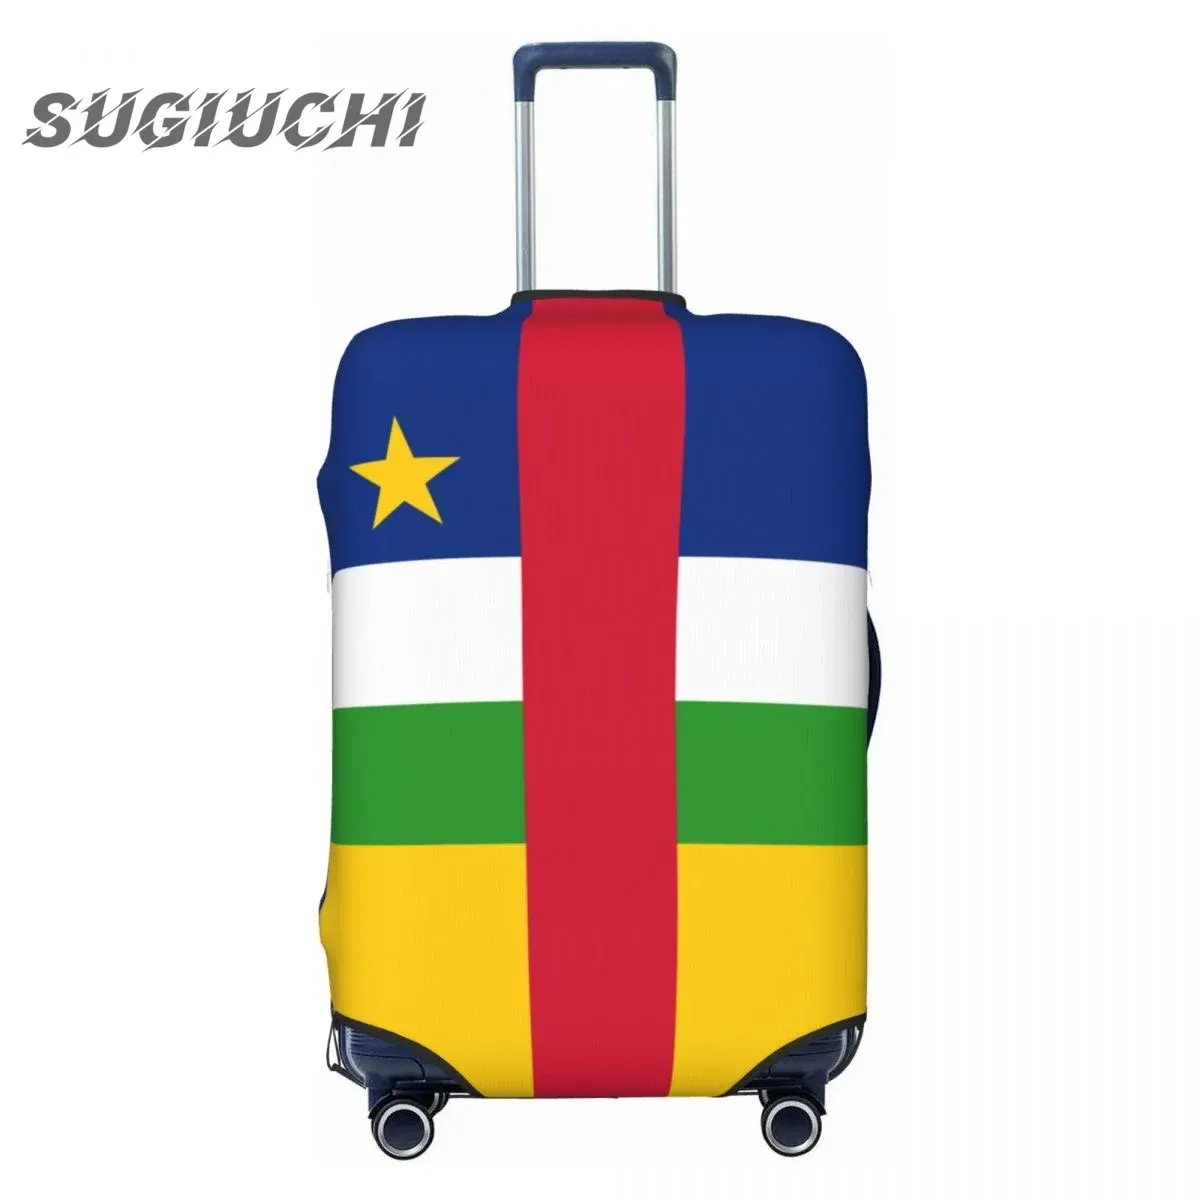 Accessoires Centrale Afrikaanse Republiek Bagage Bagage Cover Suitcase Travel Accessoires Gedrukte Elastische Dust Cover Bag Trolley Case Protective